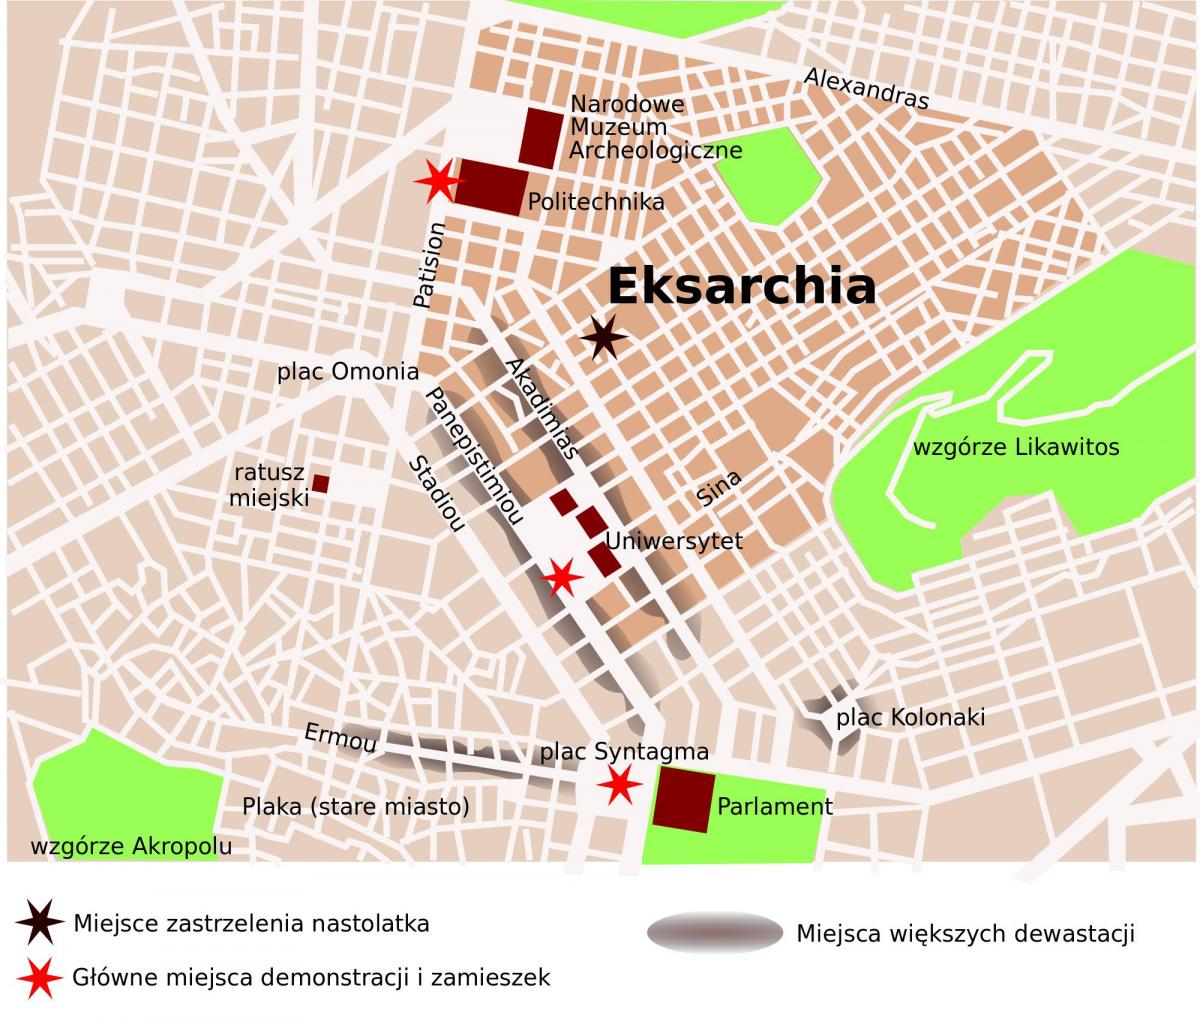 carte d'exarchia à Athènes